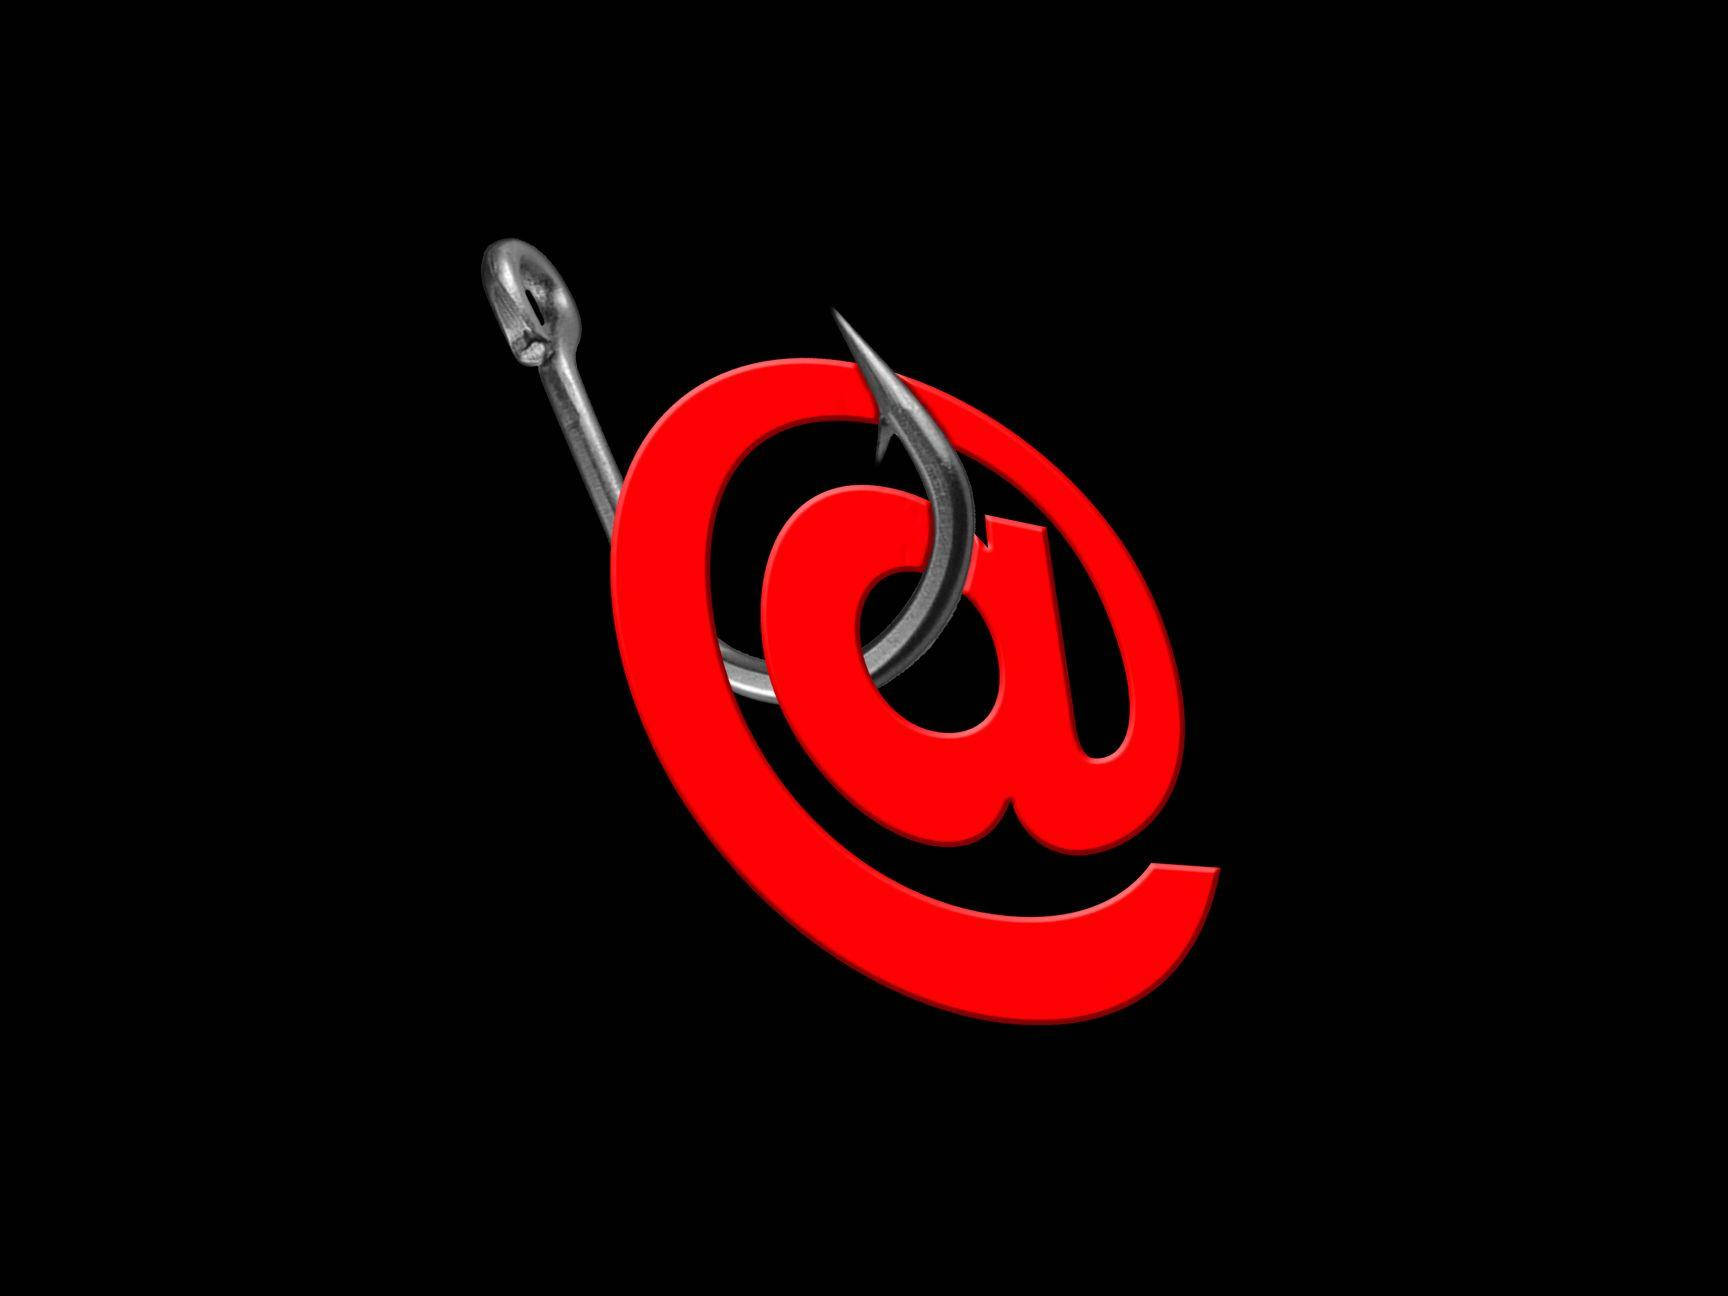 Hooked Email Symbol Background